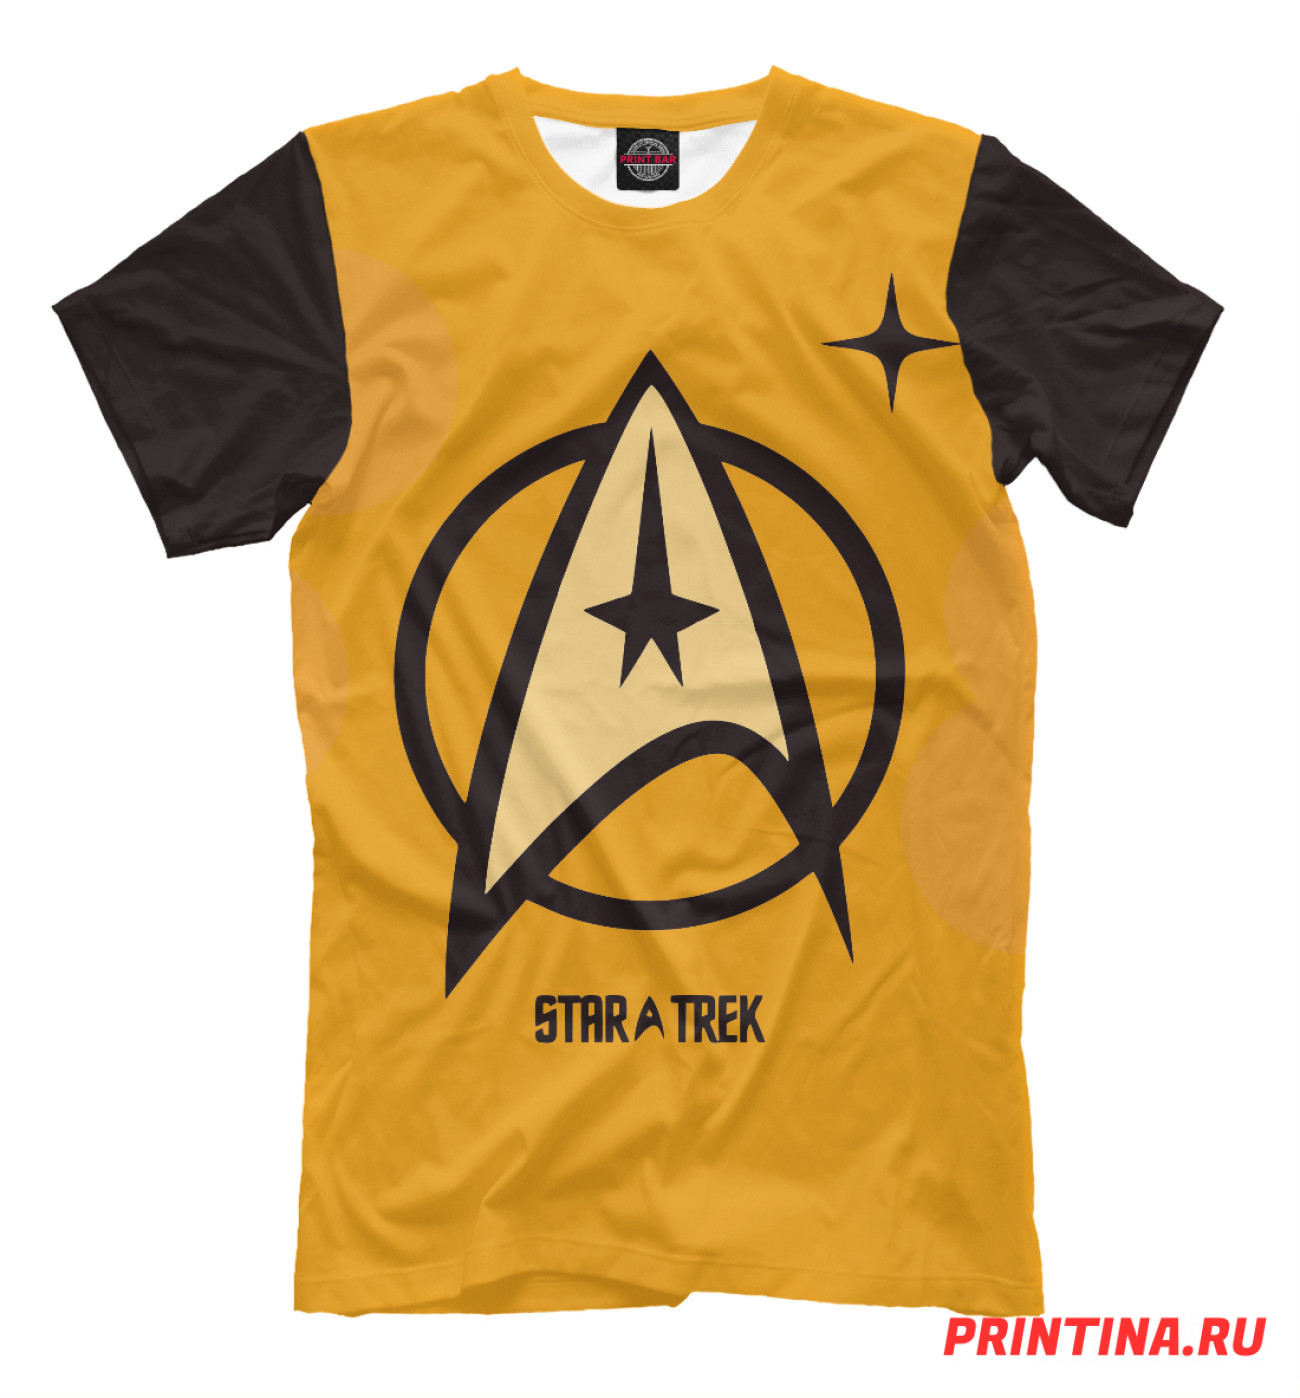 Мужская Футболка Star Trek, артикул: APD-757991-fut-2